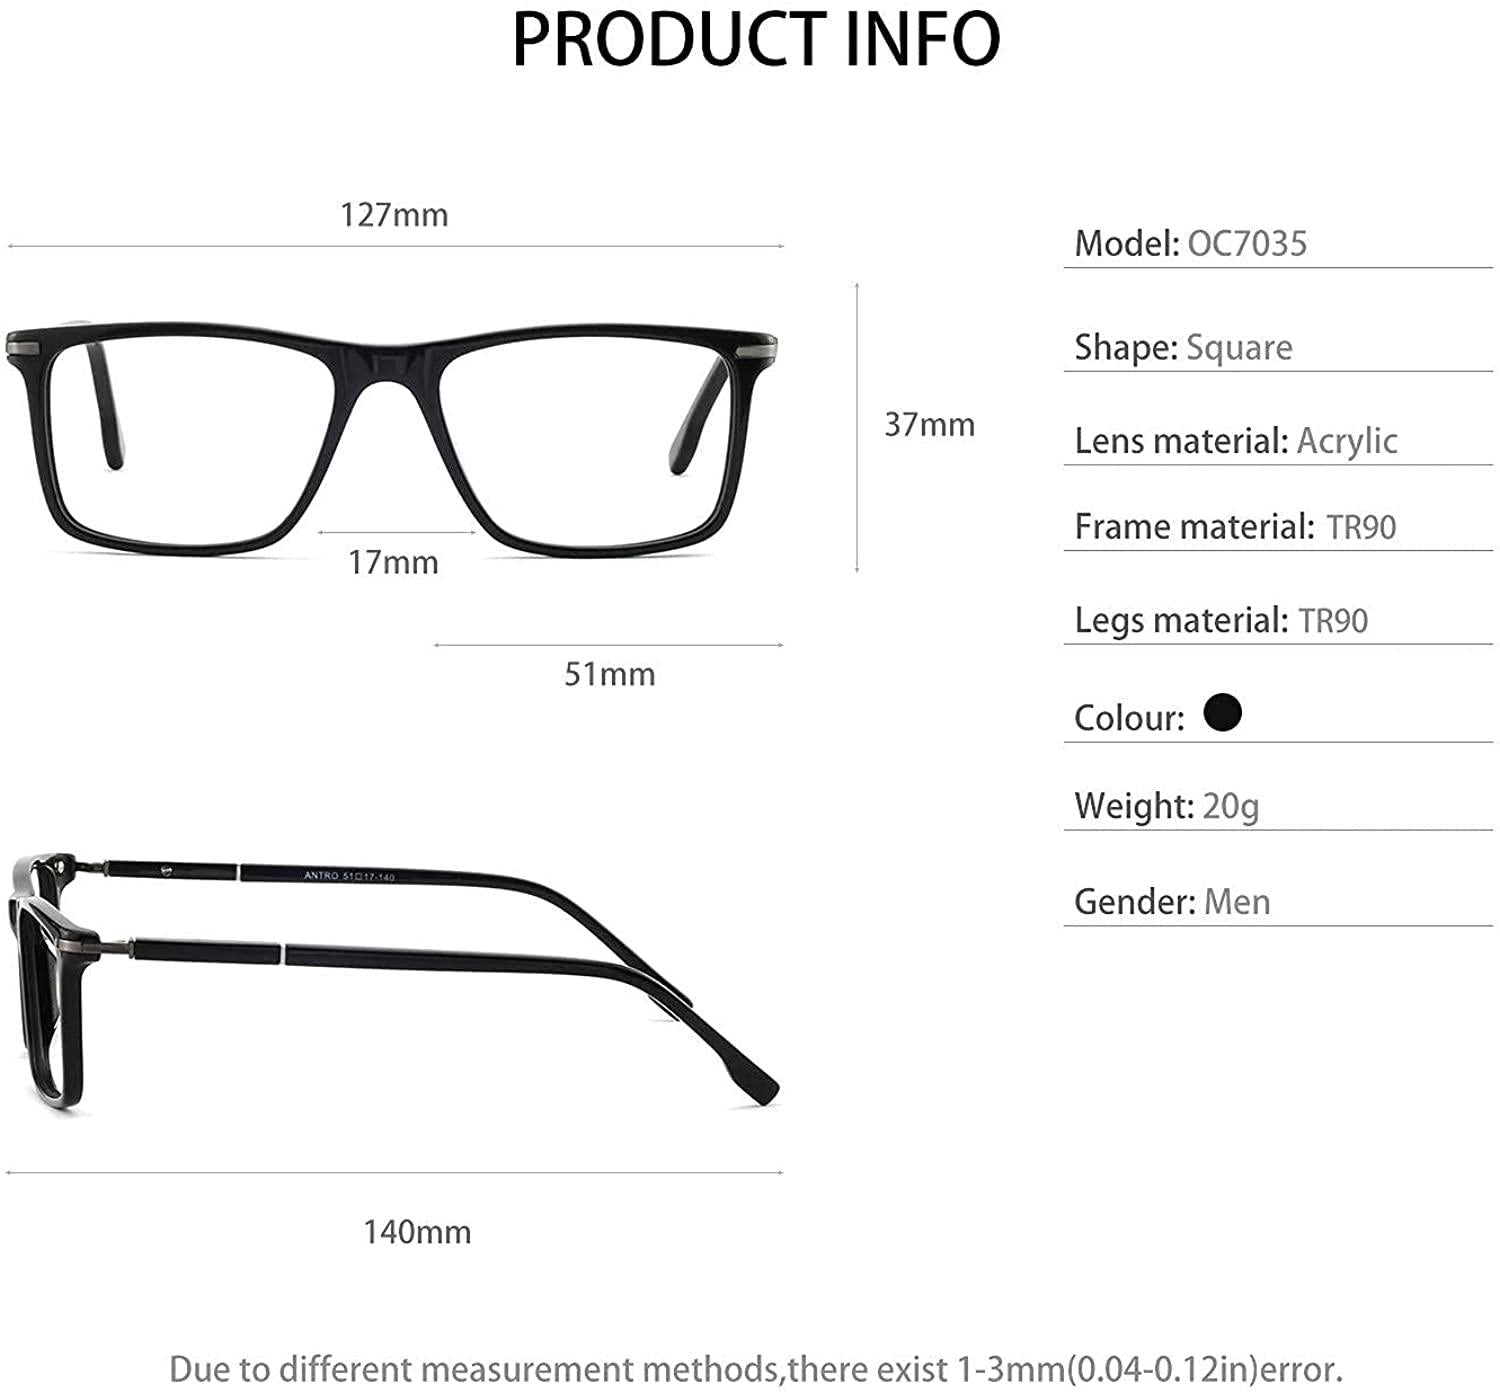 Men's Eyewear Frames Large Rectangular Eyeglasses Fashion Clear Glasses - Occichiari 